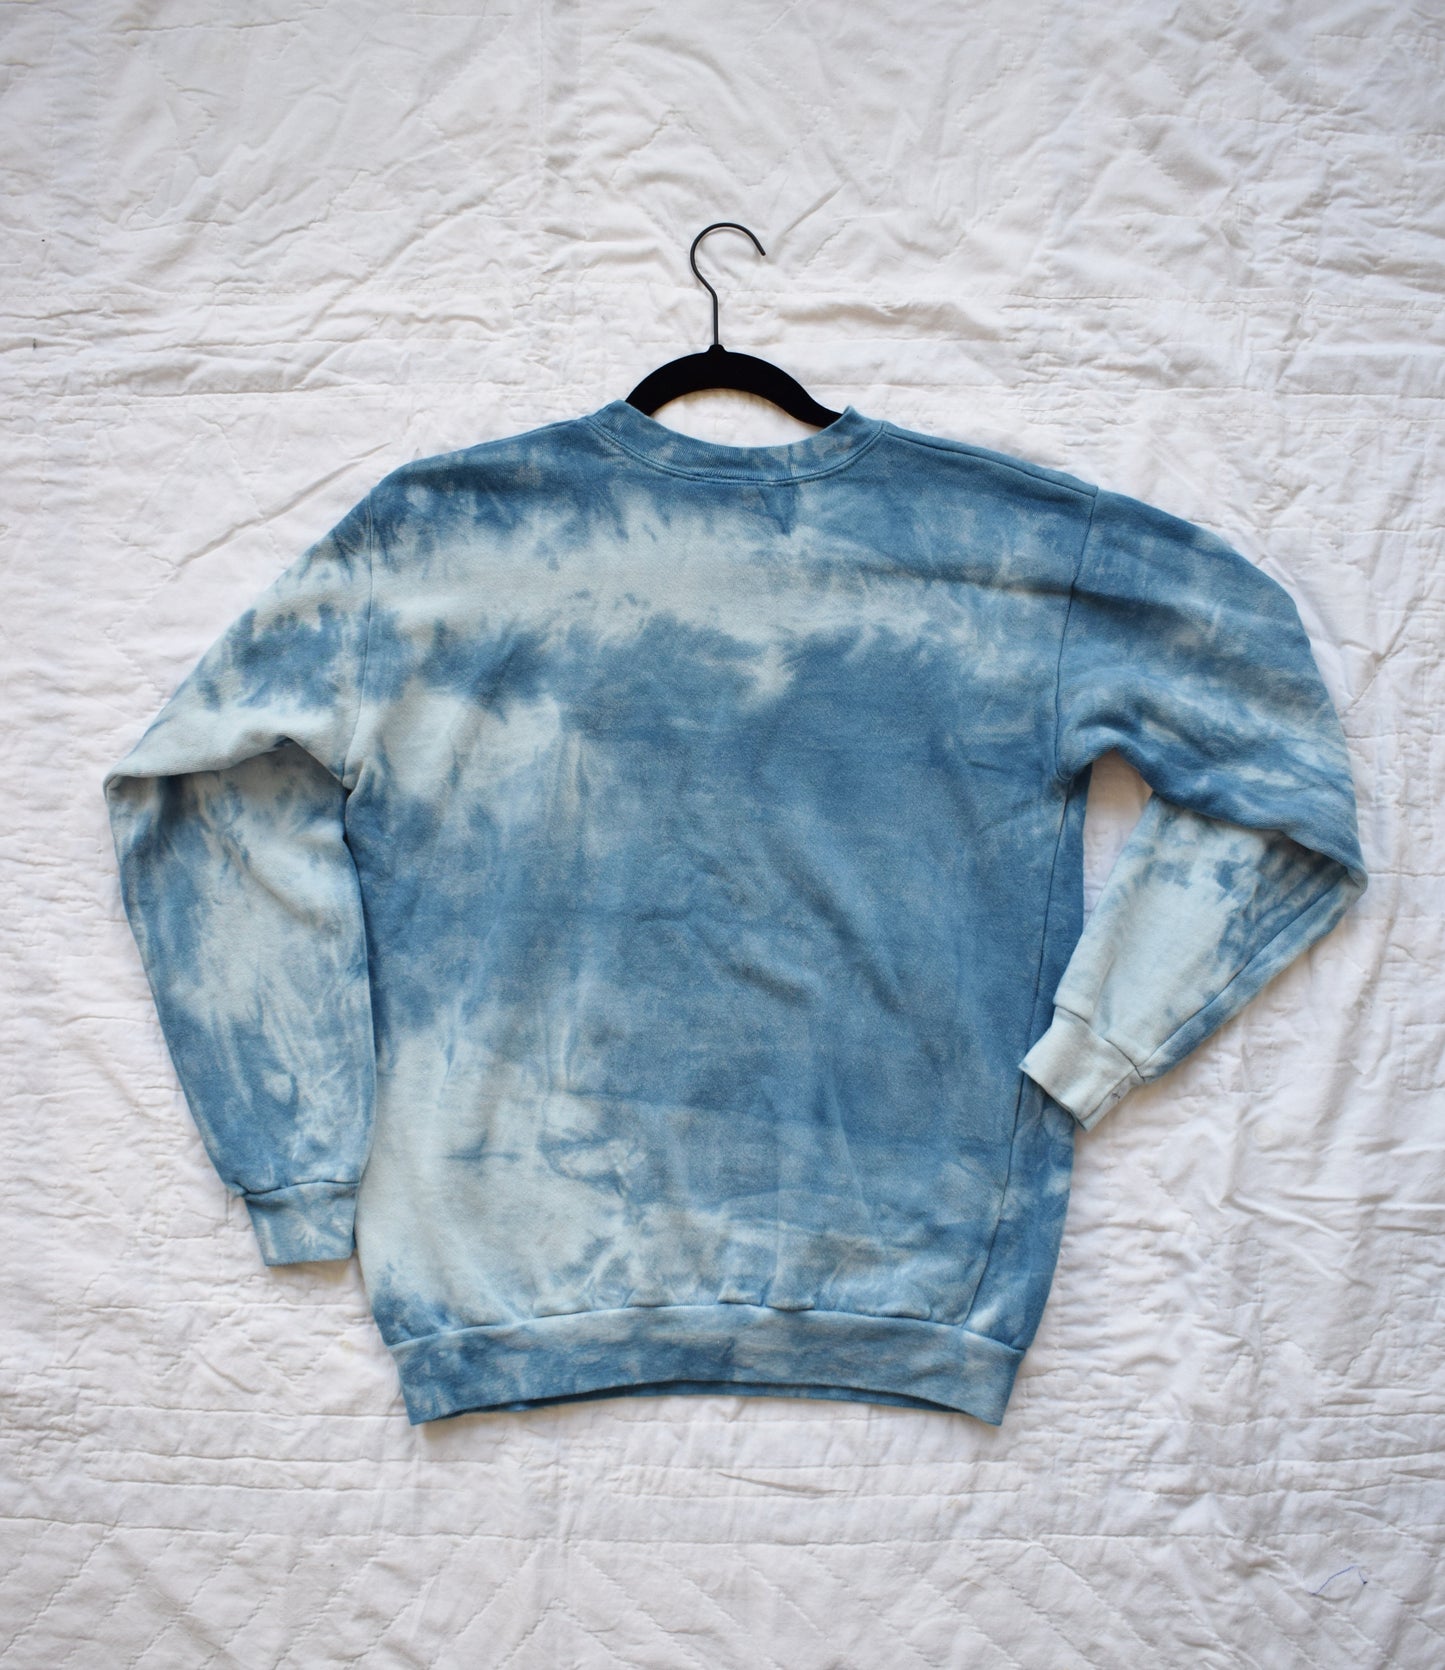 Indigo Dyed Sweatshirt, Window Pane Series 1